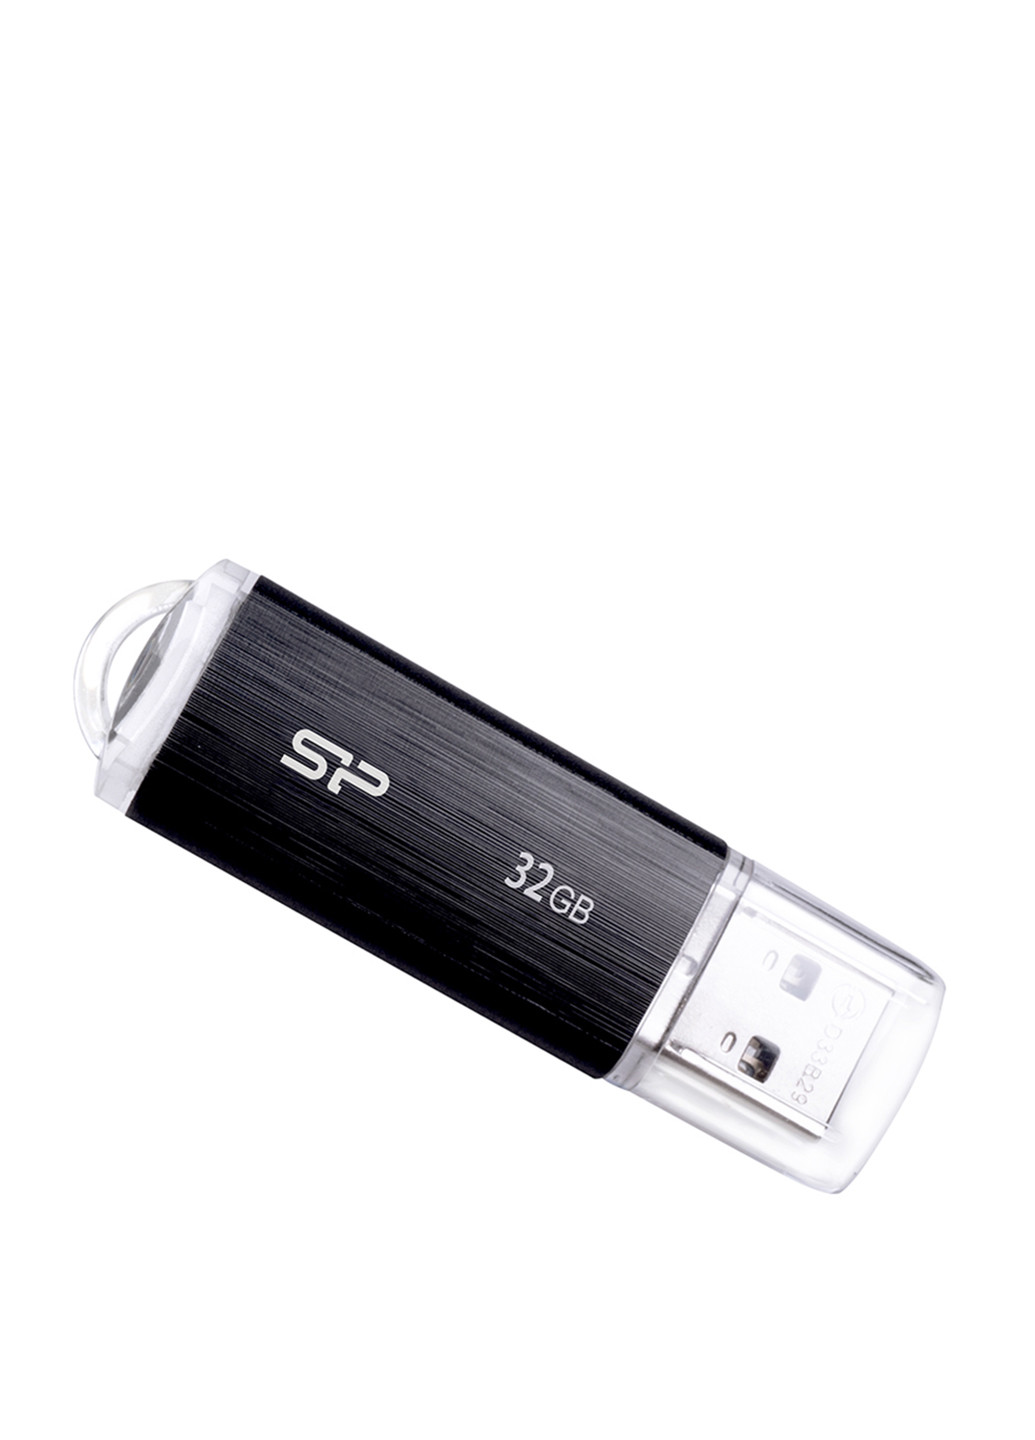 Флеш пам'ять USB Ultima U02 32GB USB 2.0 Black (SP032GBUF2U02V1K) Silicon Power флеш память usb silicon power ultima u02 32gb usb 2.0 black (sp032gbuf2u02v1k) (130221134)